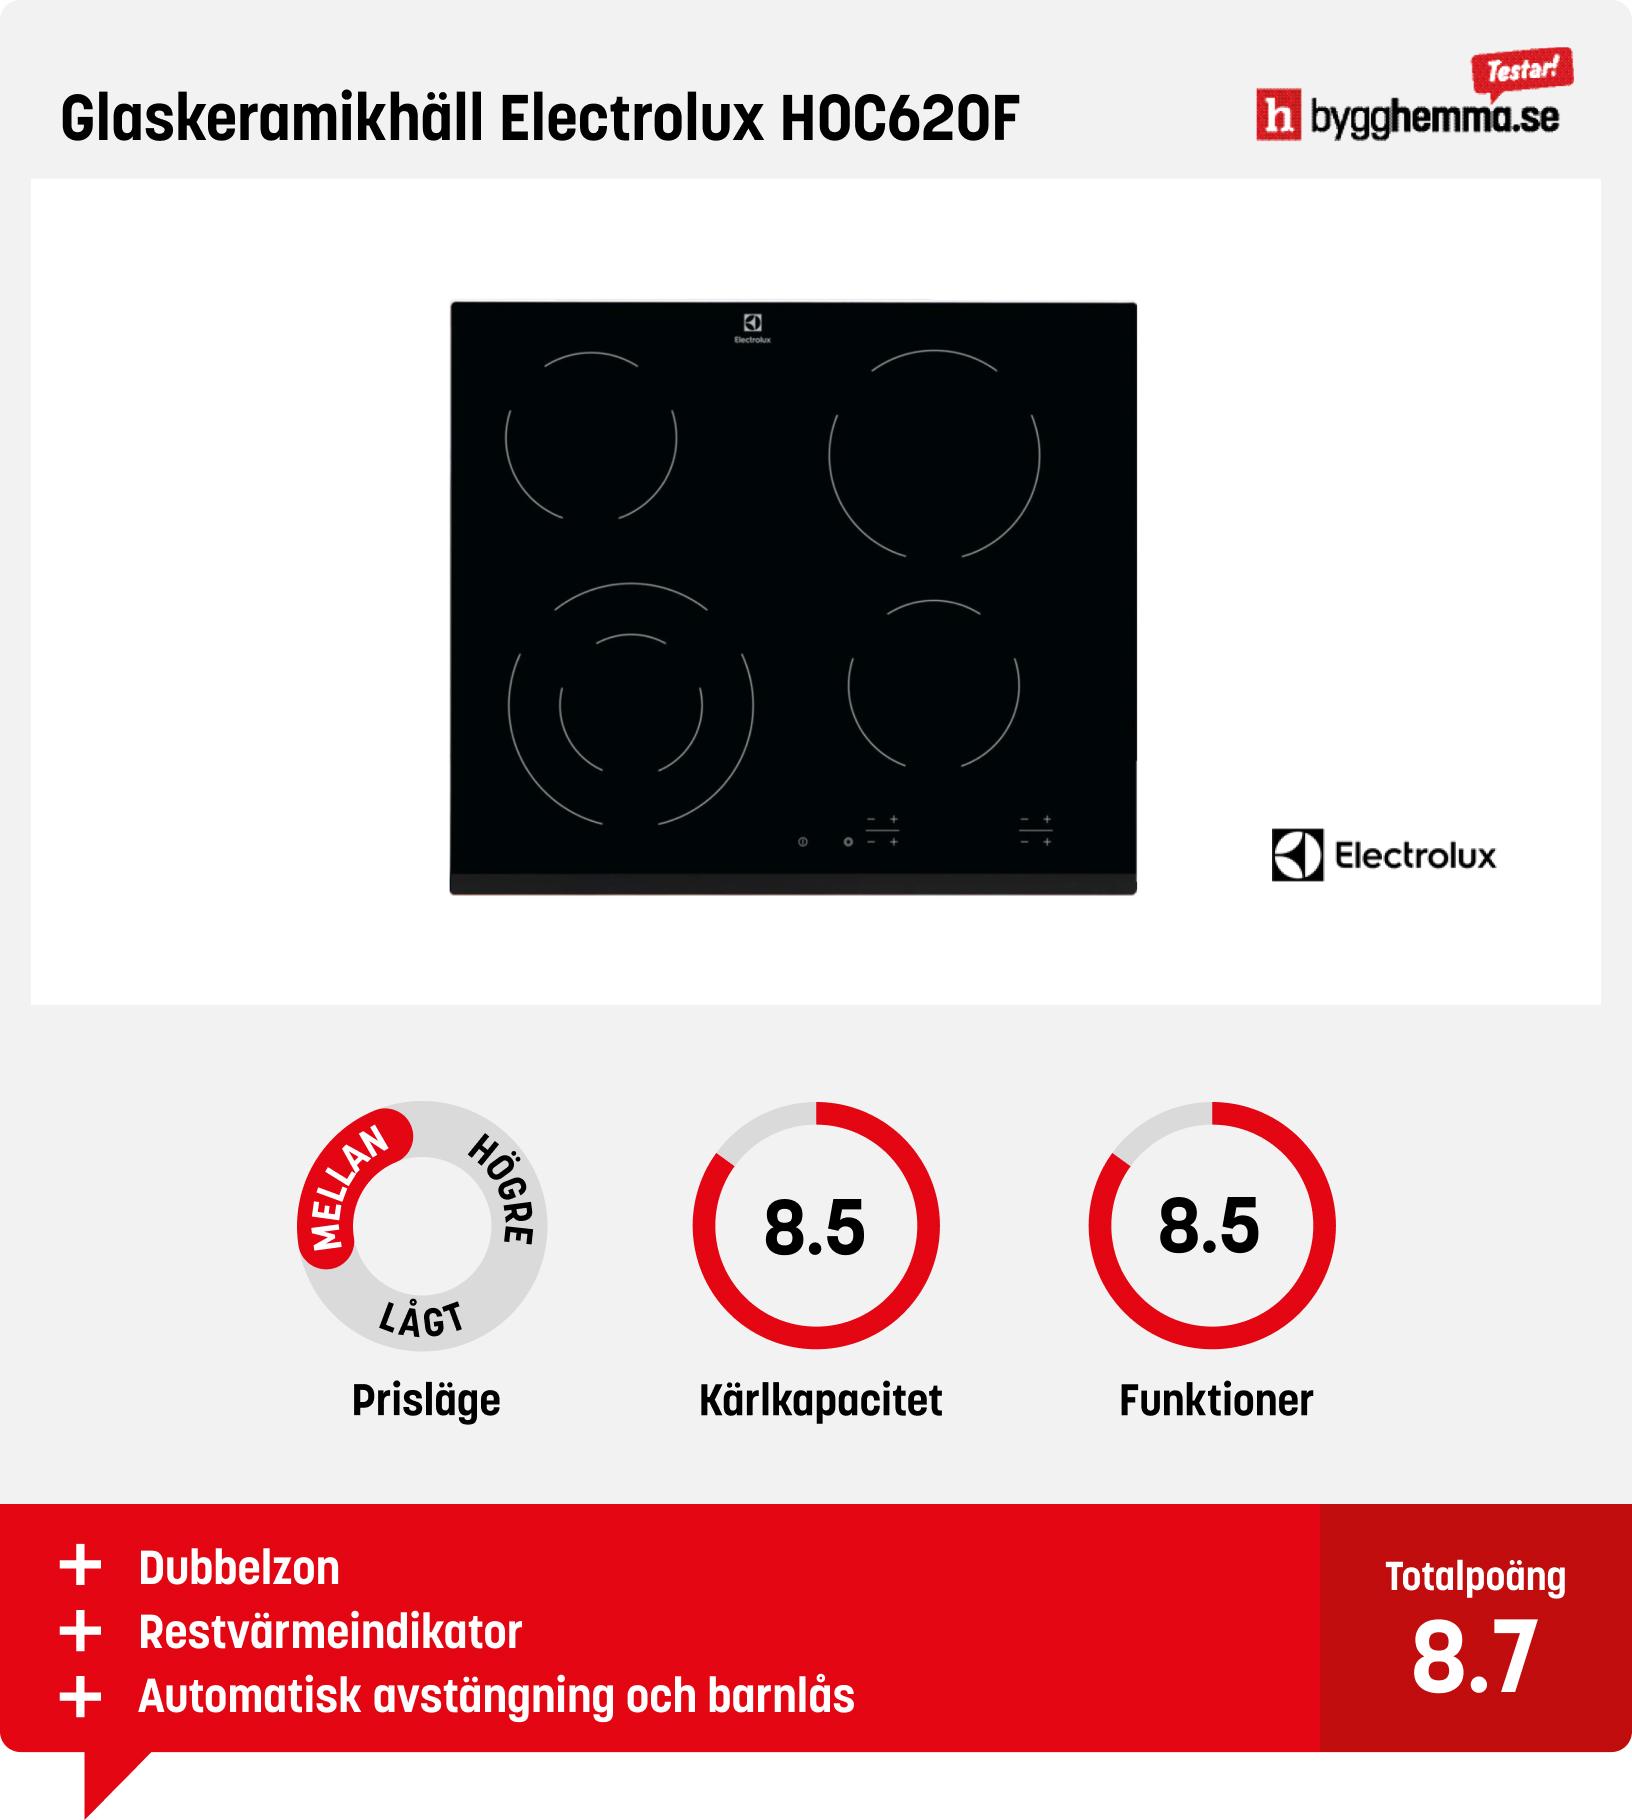 Glaskeramikhäll bäst i test - Glaskeramikhäll Electrolux HOC620F